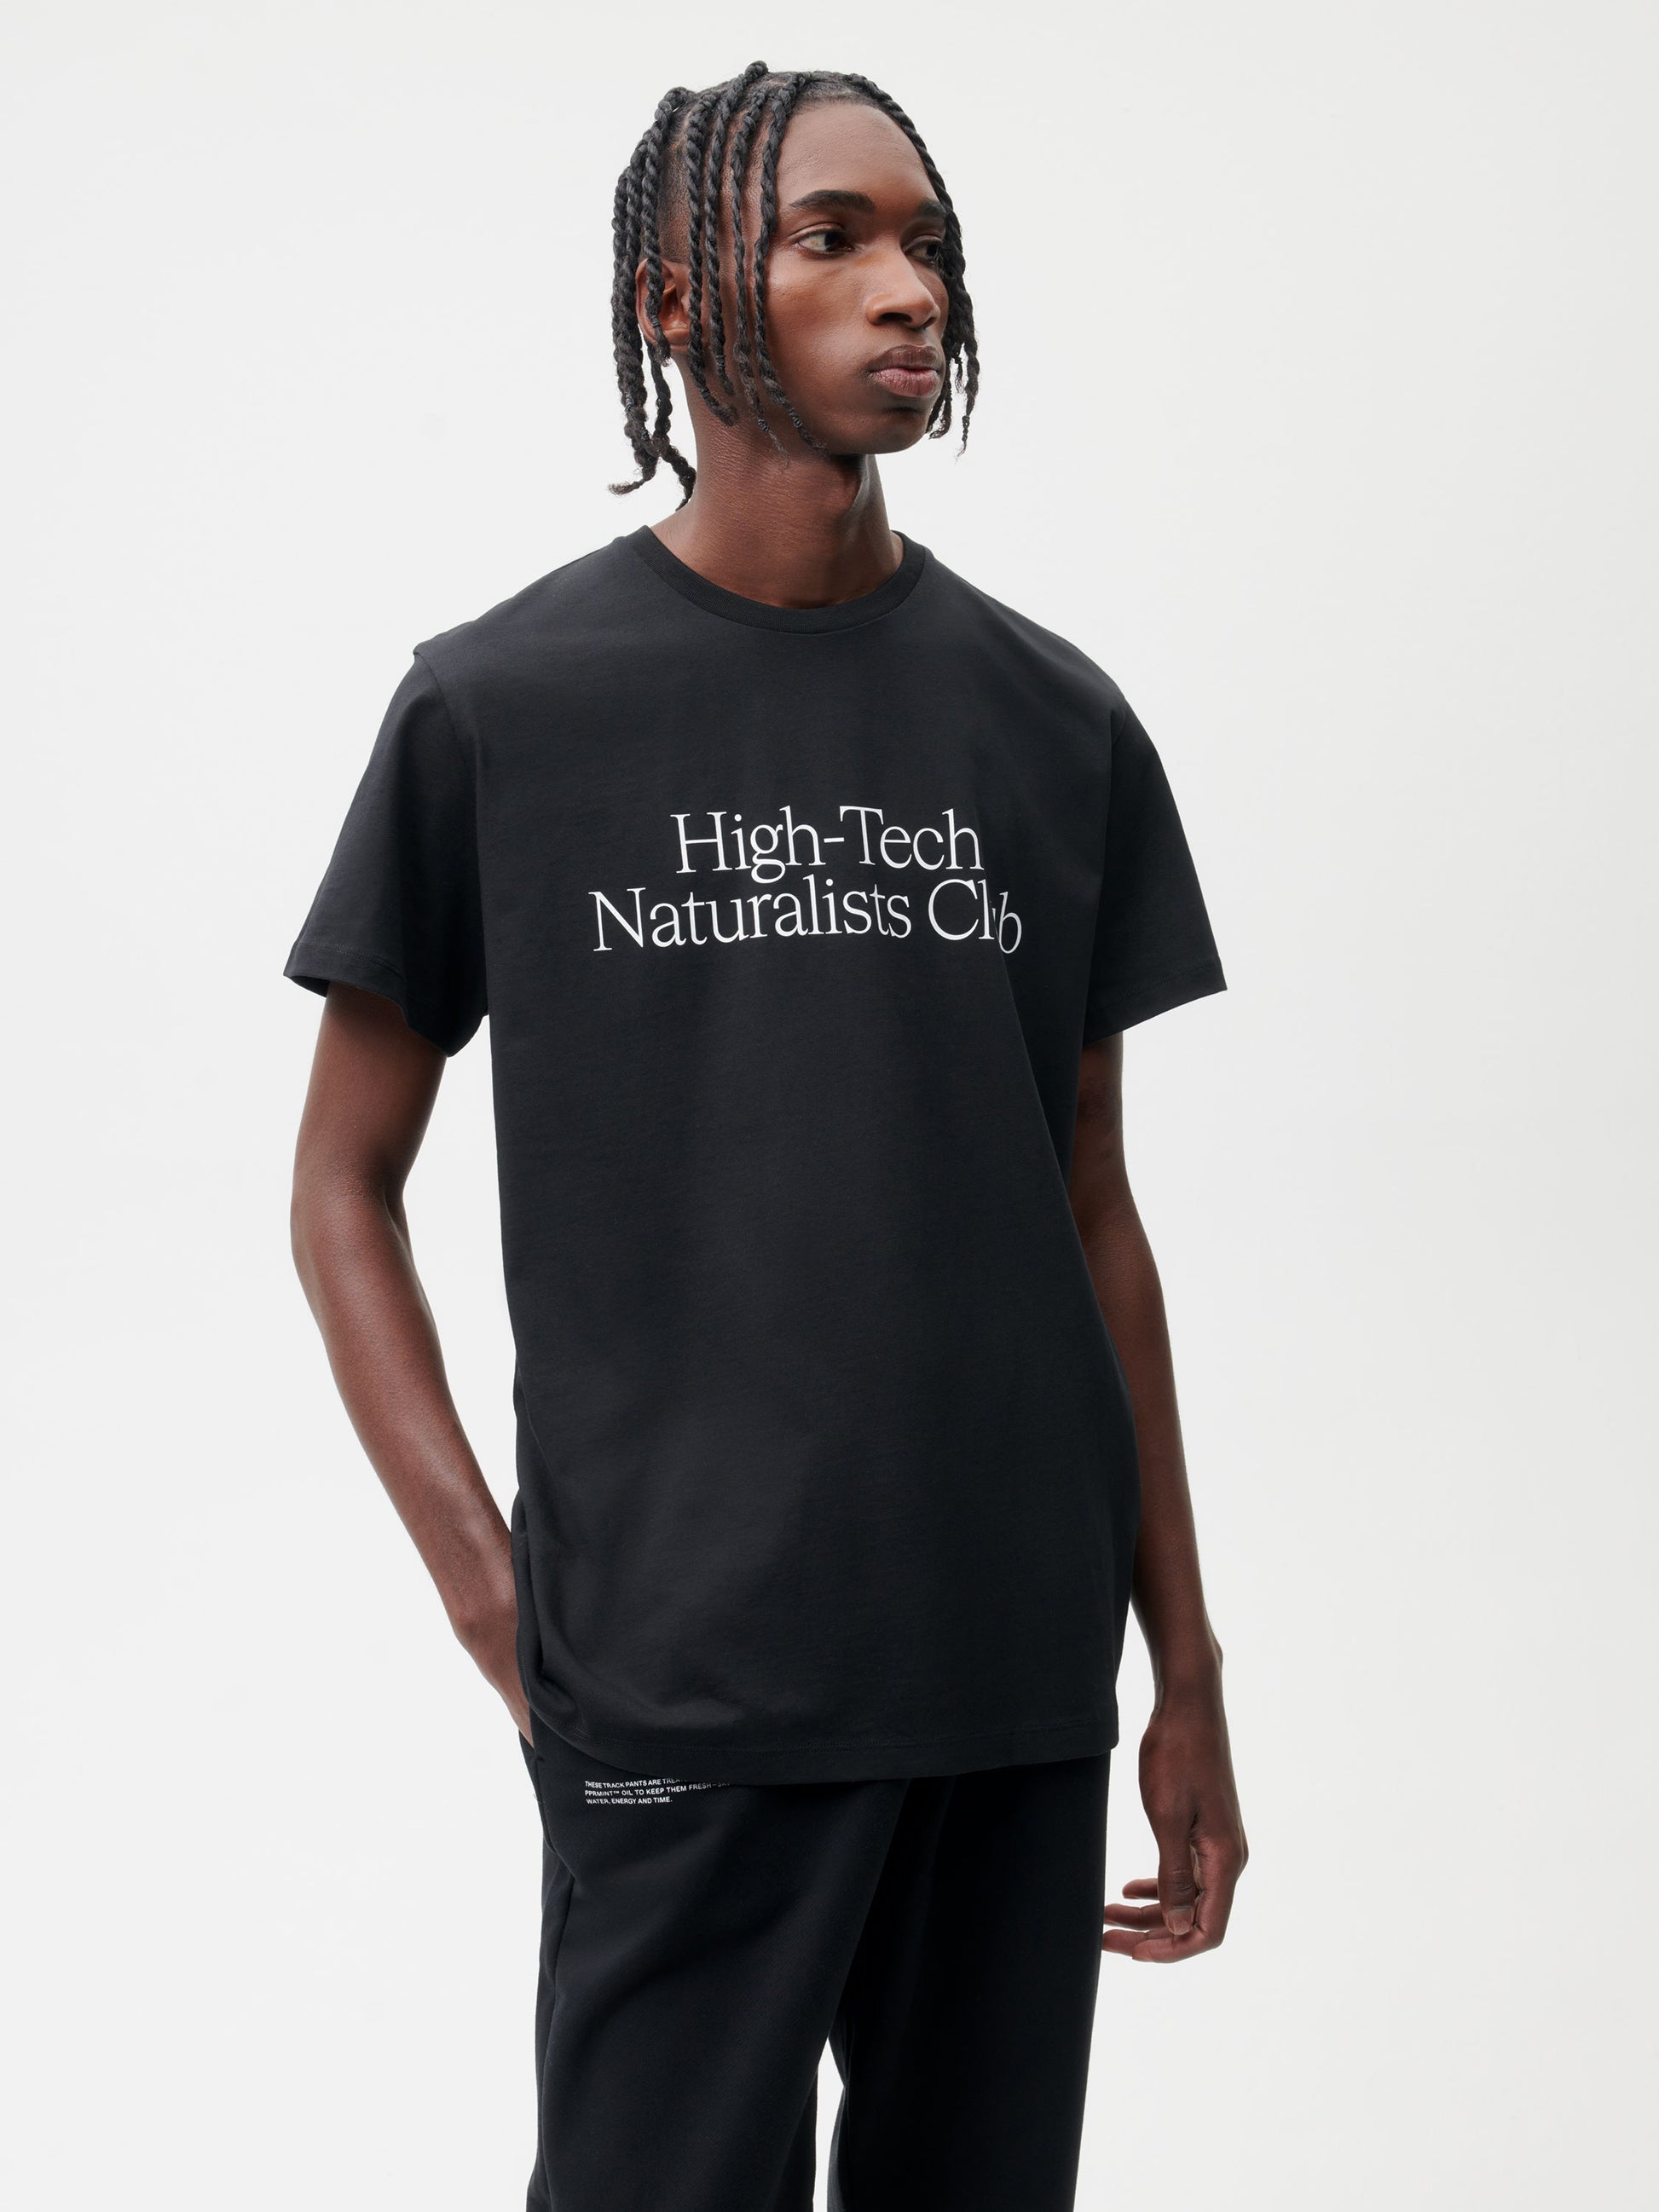       High-Tech-Naturalist-Club-Organic-Cotton-T-Shirt-Black-Male-1